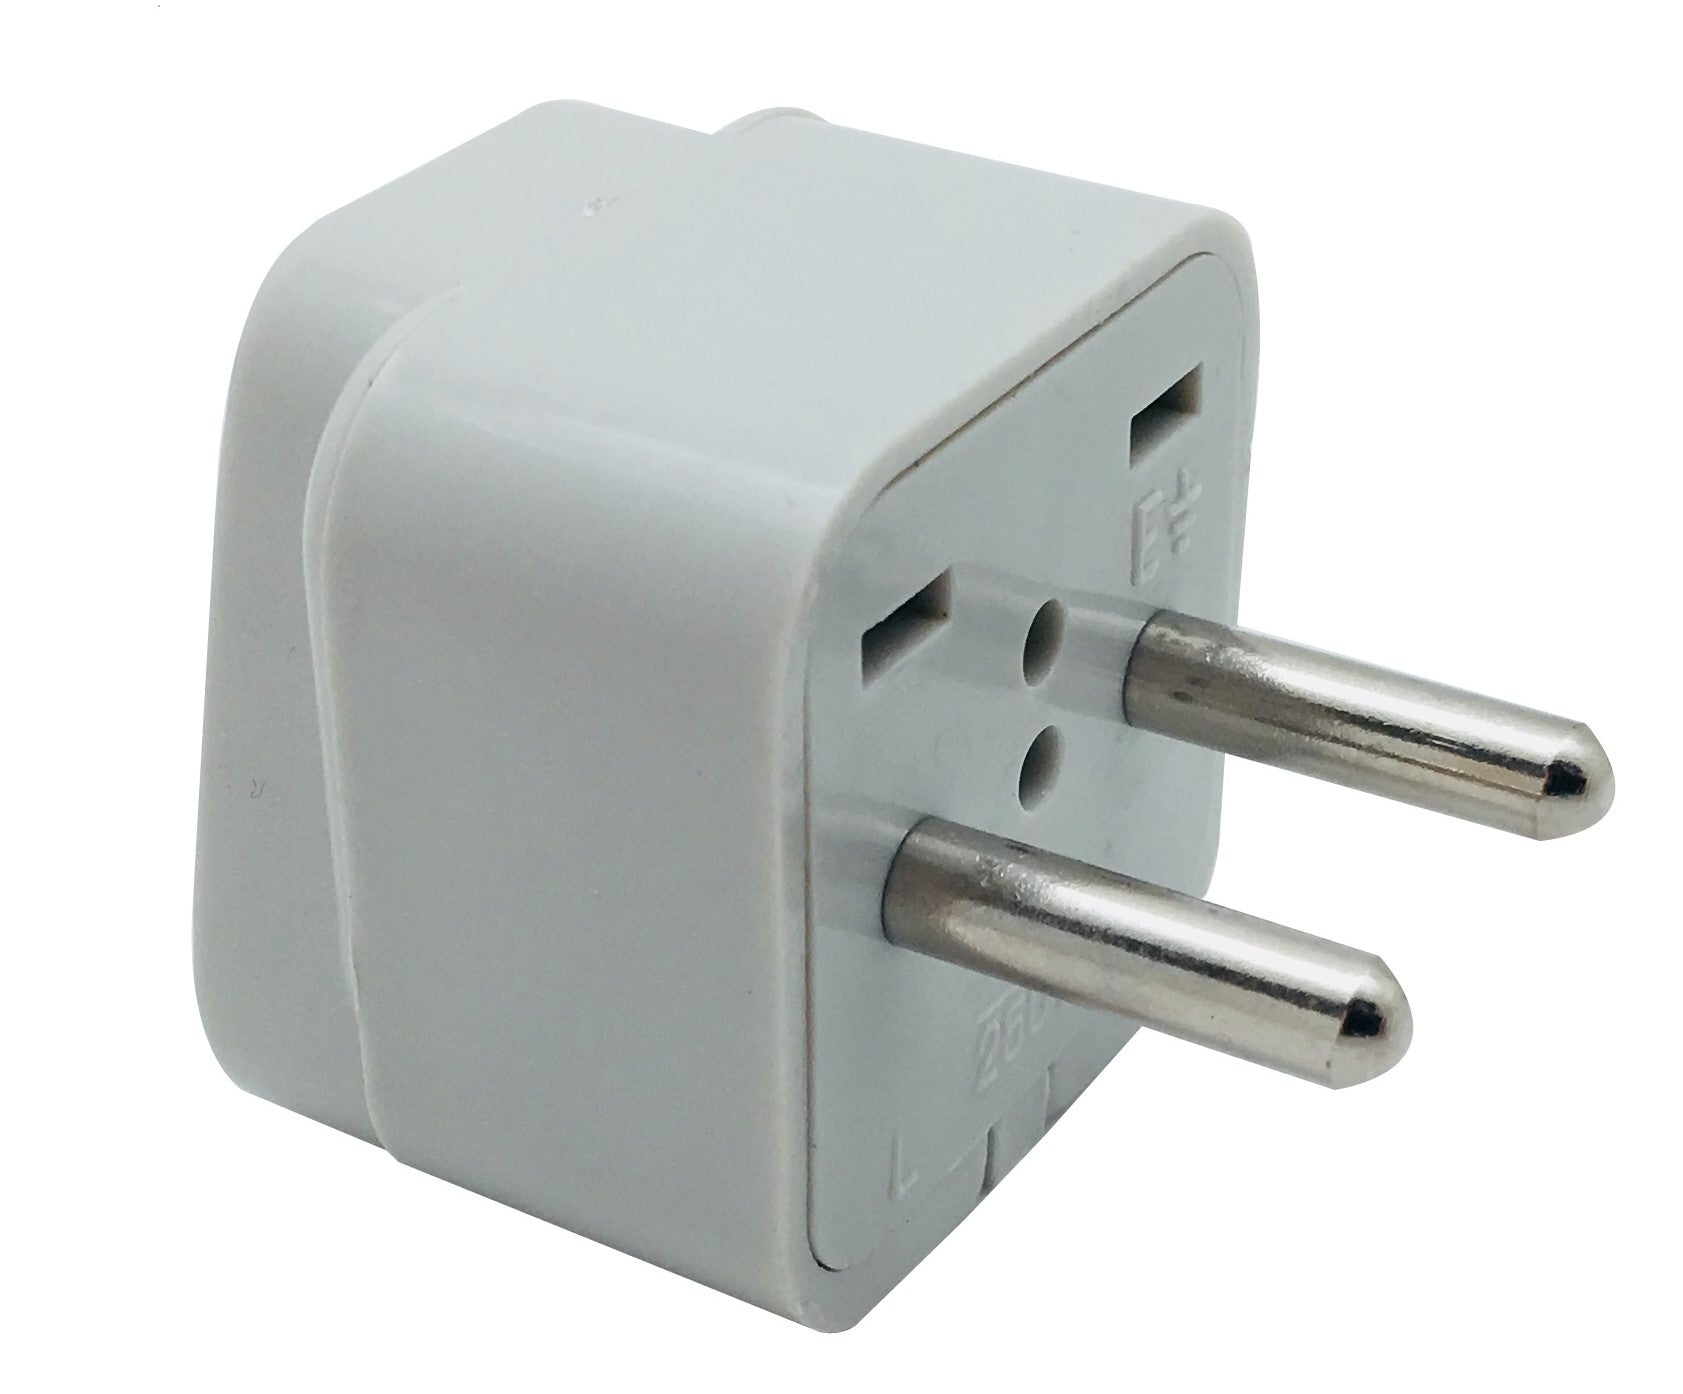 42-0304 Universal Power Plug Adapter: Round pin attachment plug